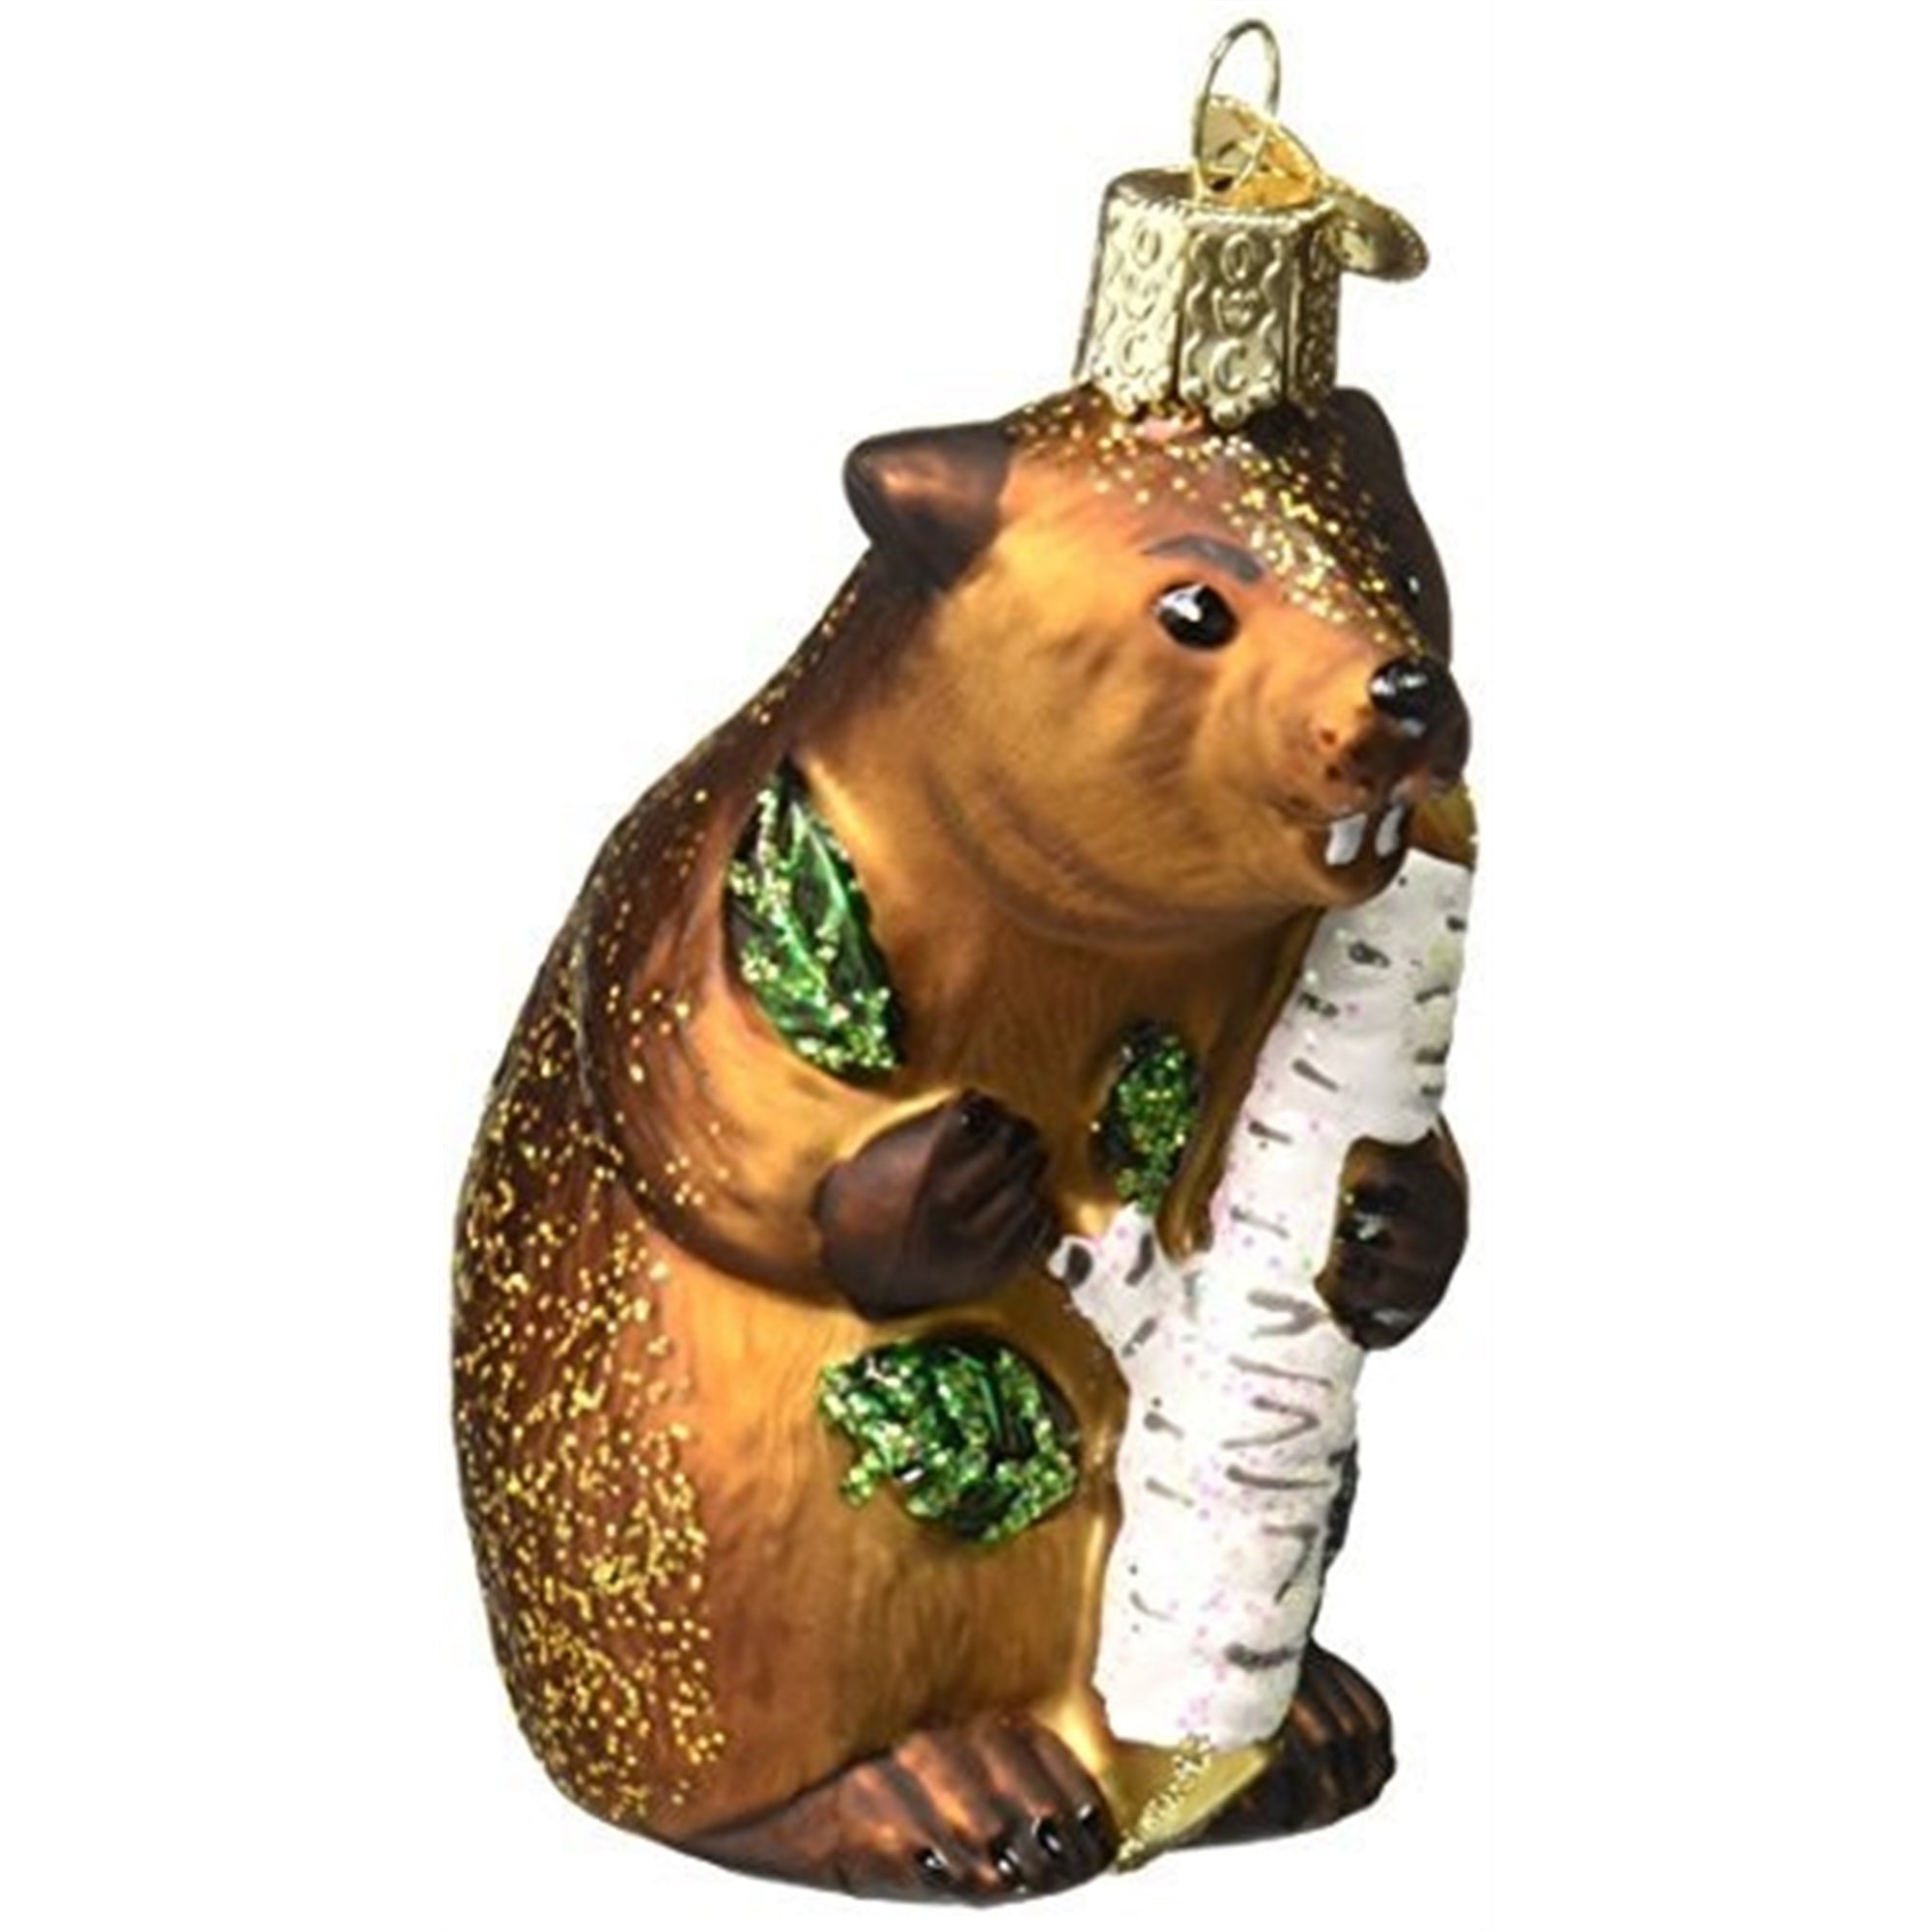 Old World Christmas Eager Beaver Glass Blown Ornament